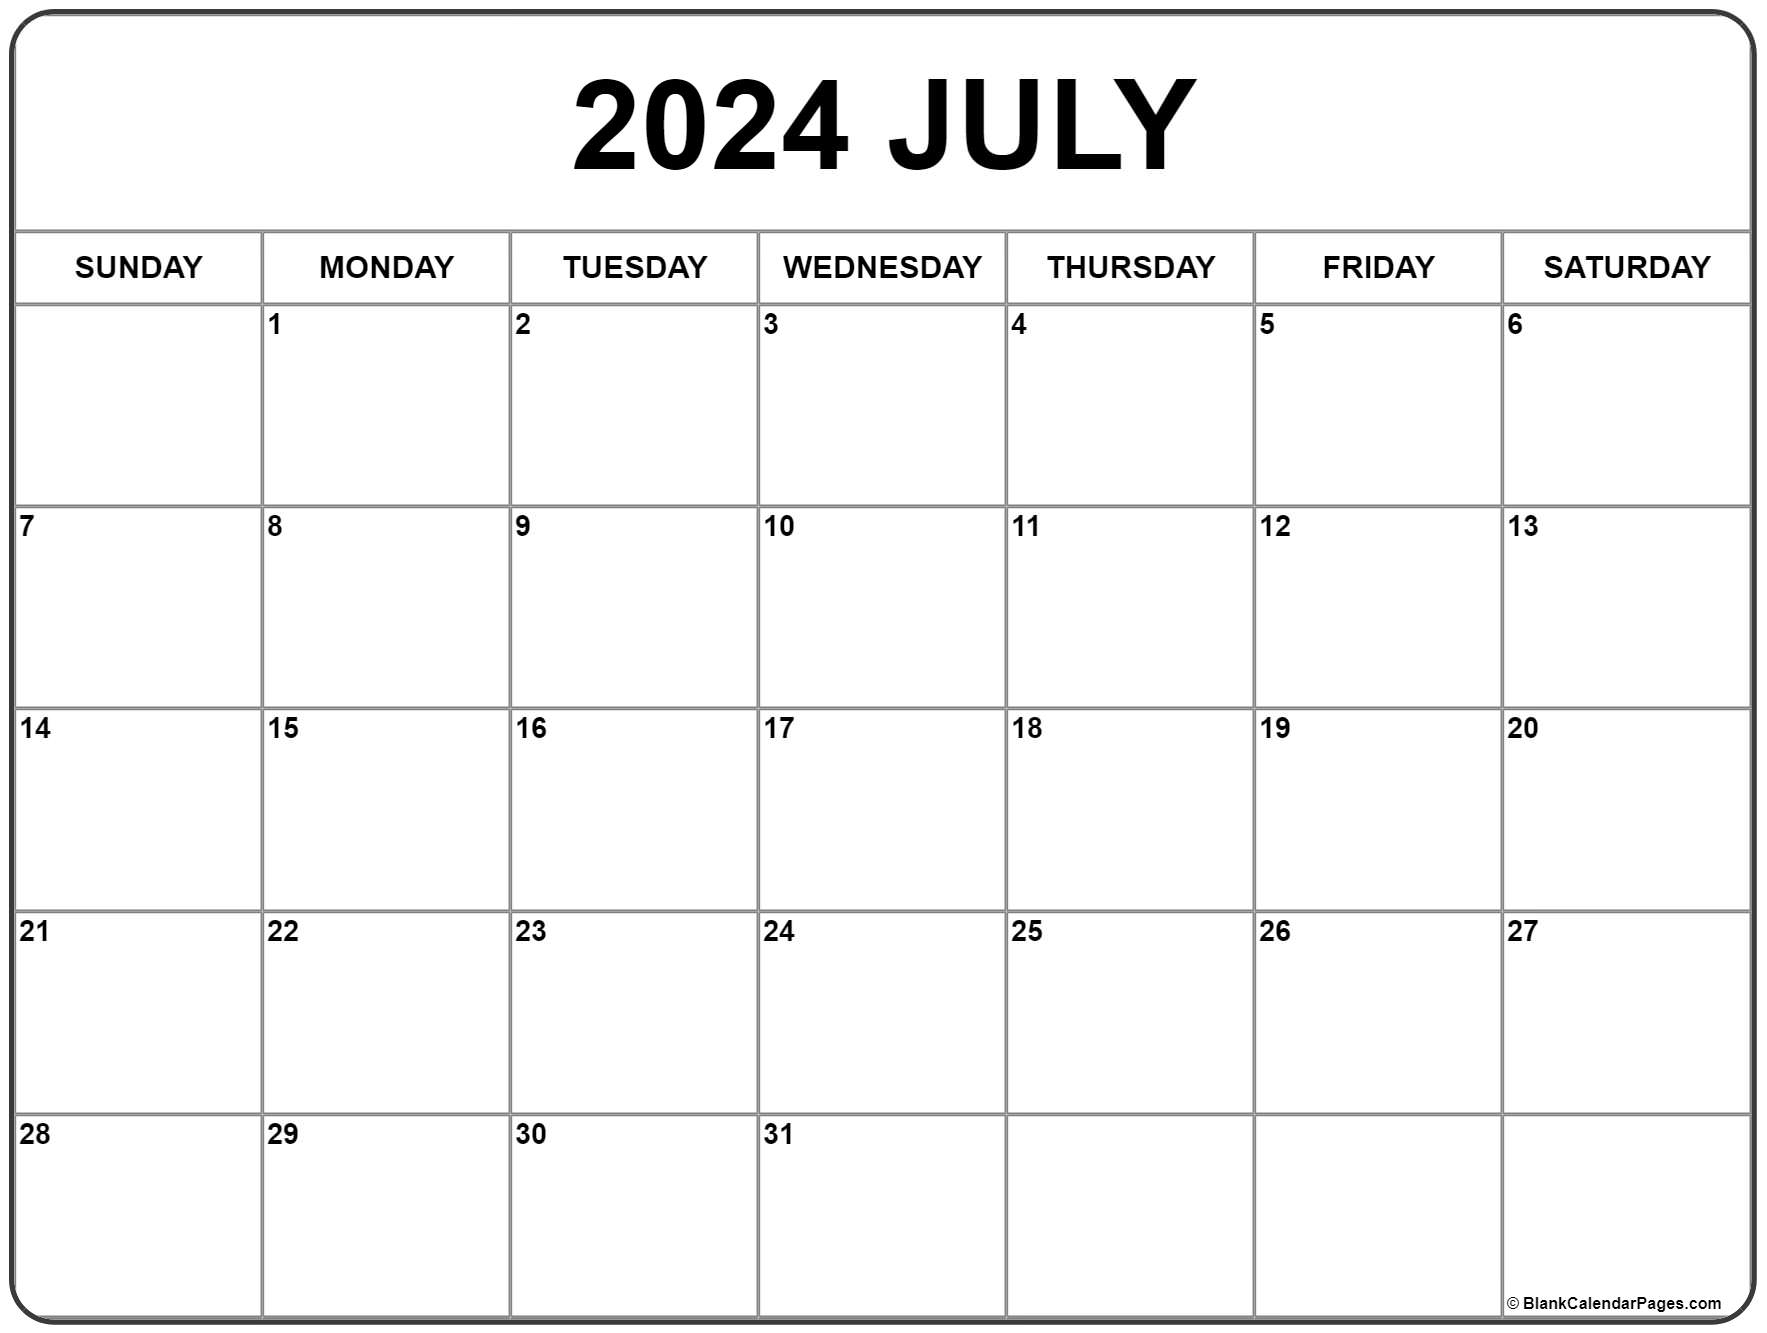 July 2021 Calendar Template July 2021 calendar | free printable monthly calendars